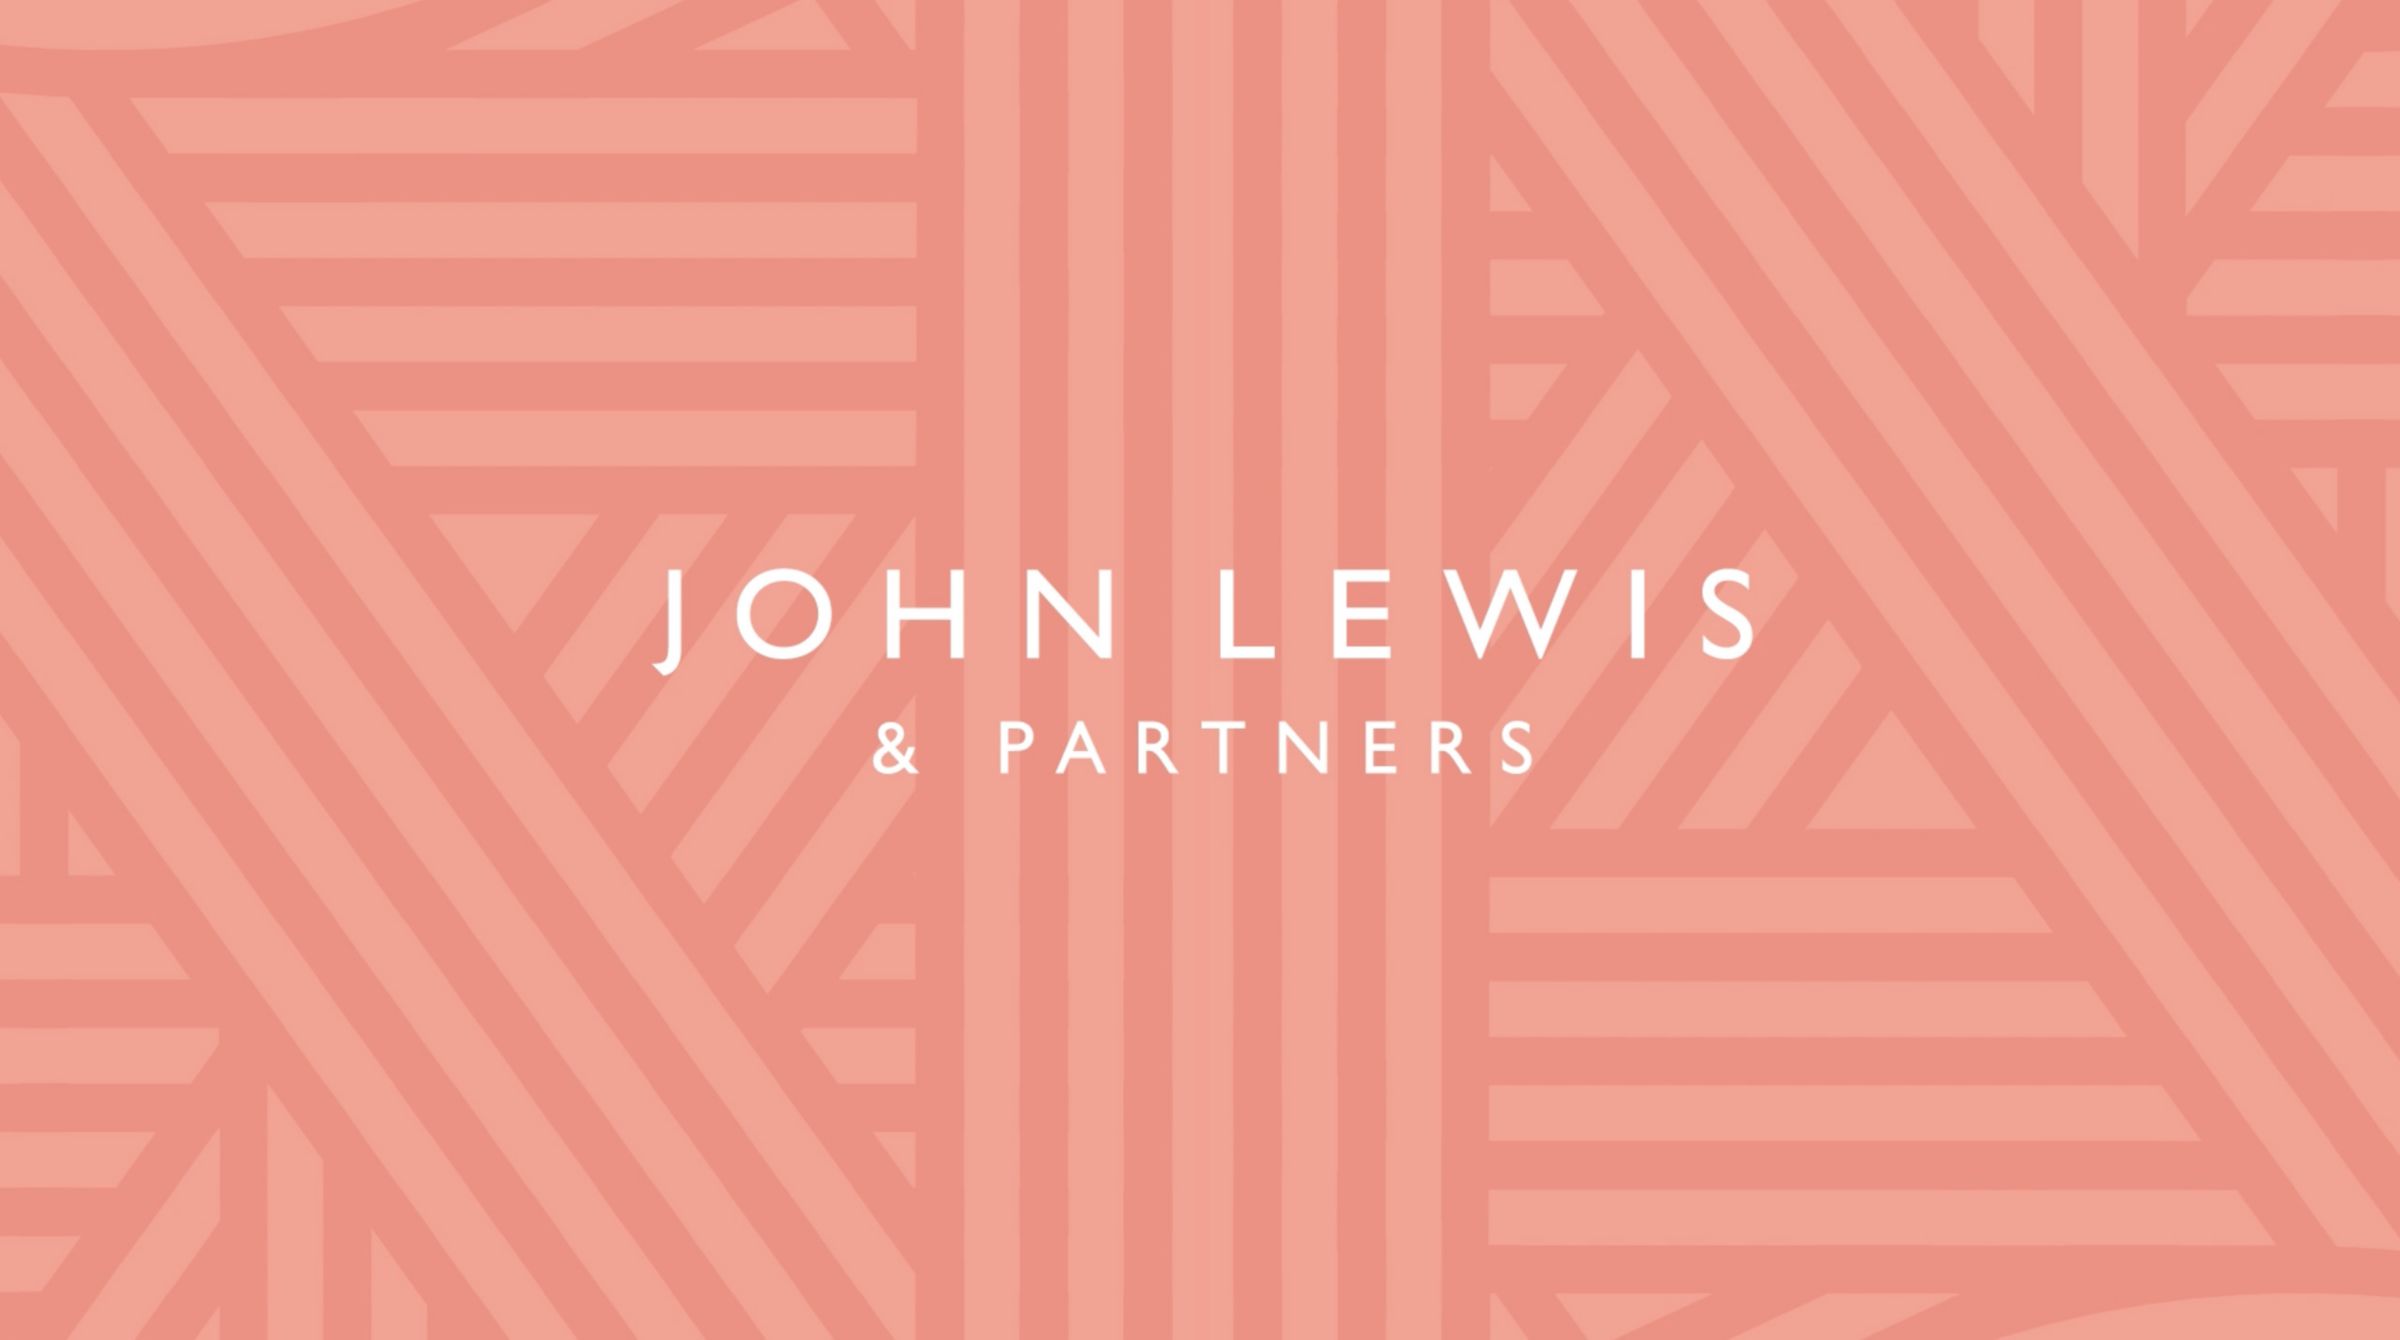 Video of the opening of John Lewis & Partners Edinburgh